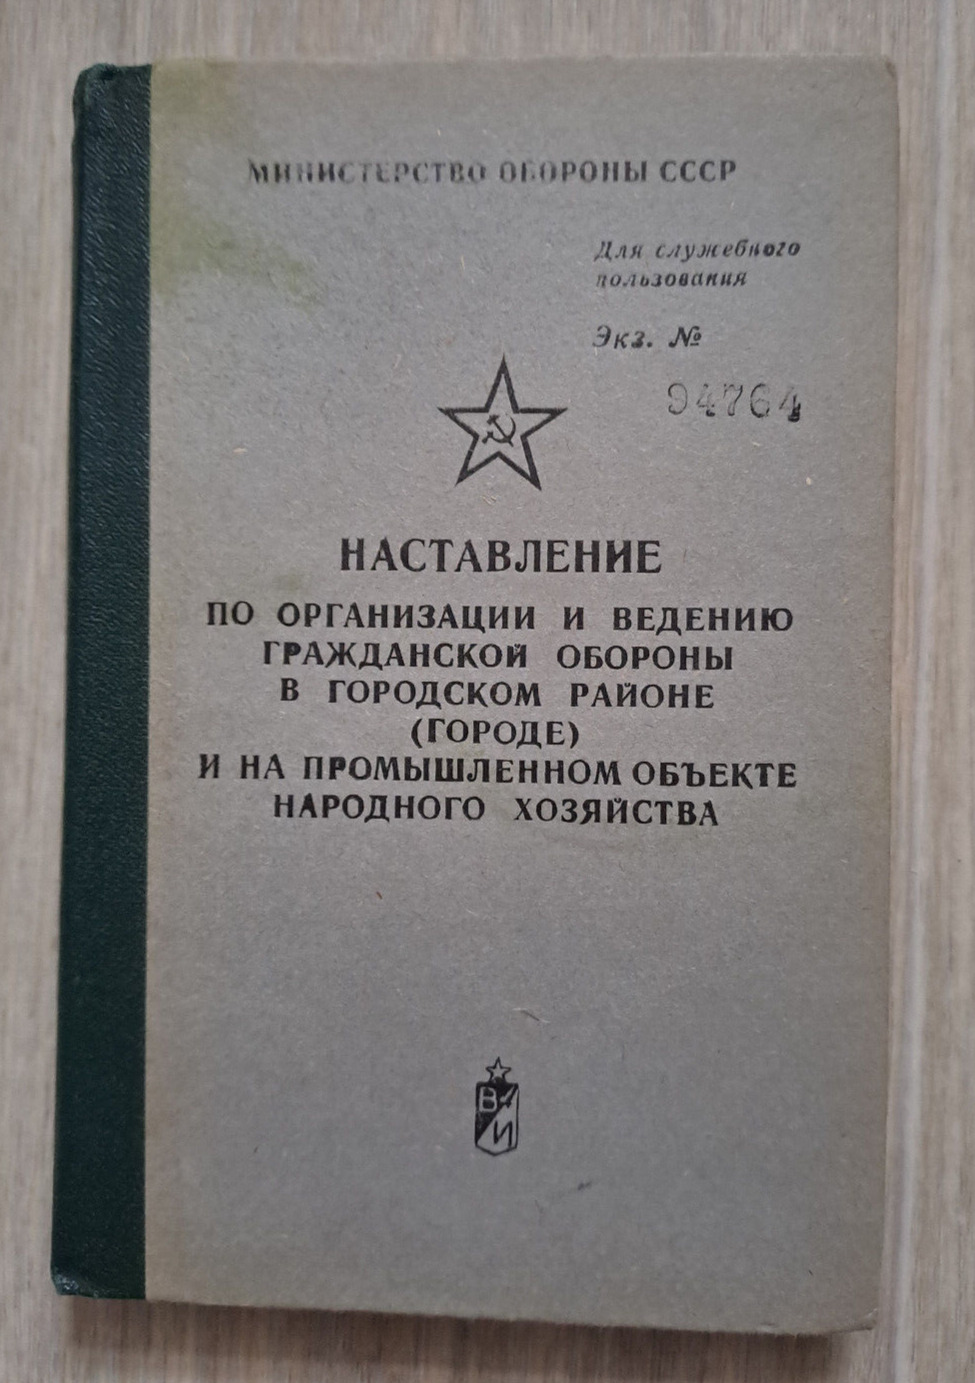 1976 Manual organization of civil defense in city military soviet Russian book